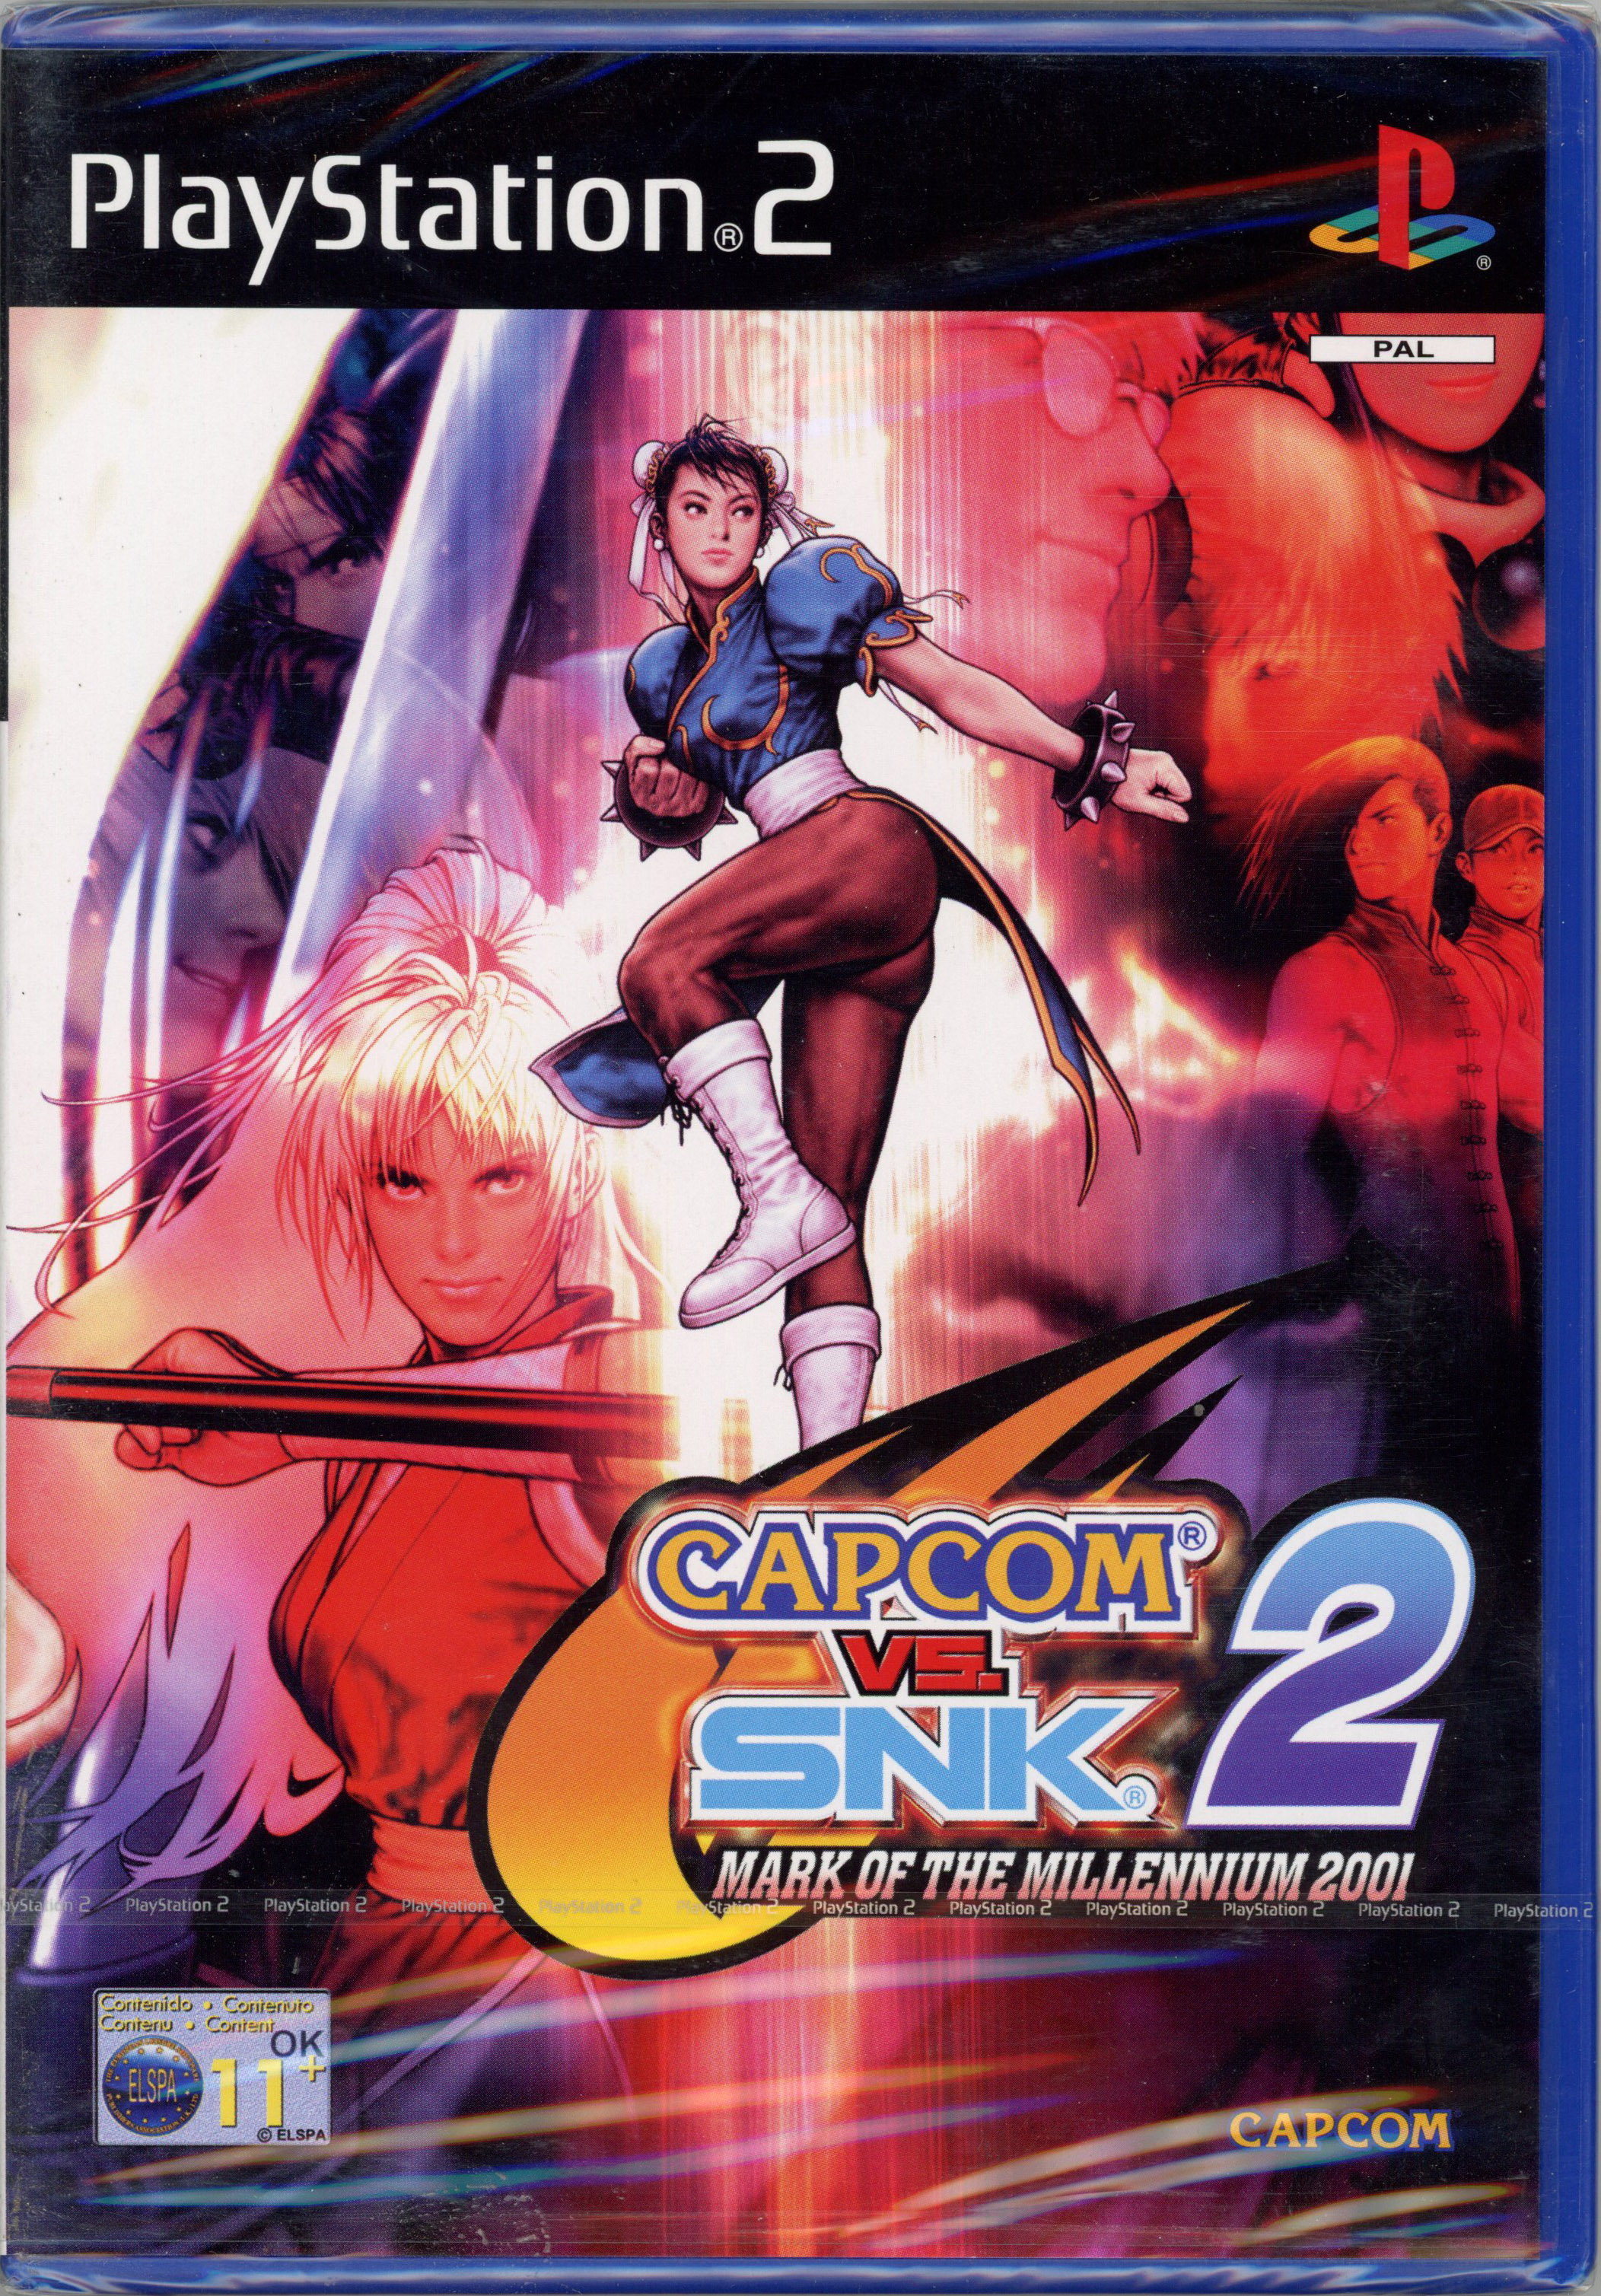 Sony - Capcom Vs SNK 2 Mark of the Millennium 2001 - PlayStation 2 - Factory Sealed